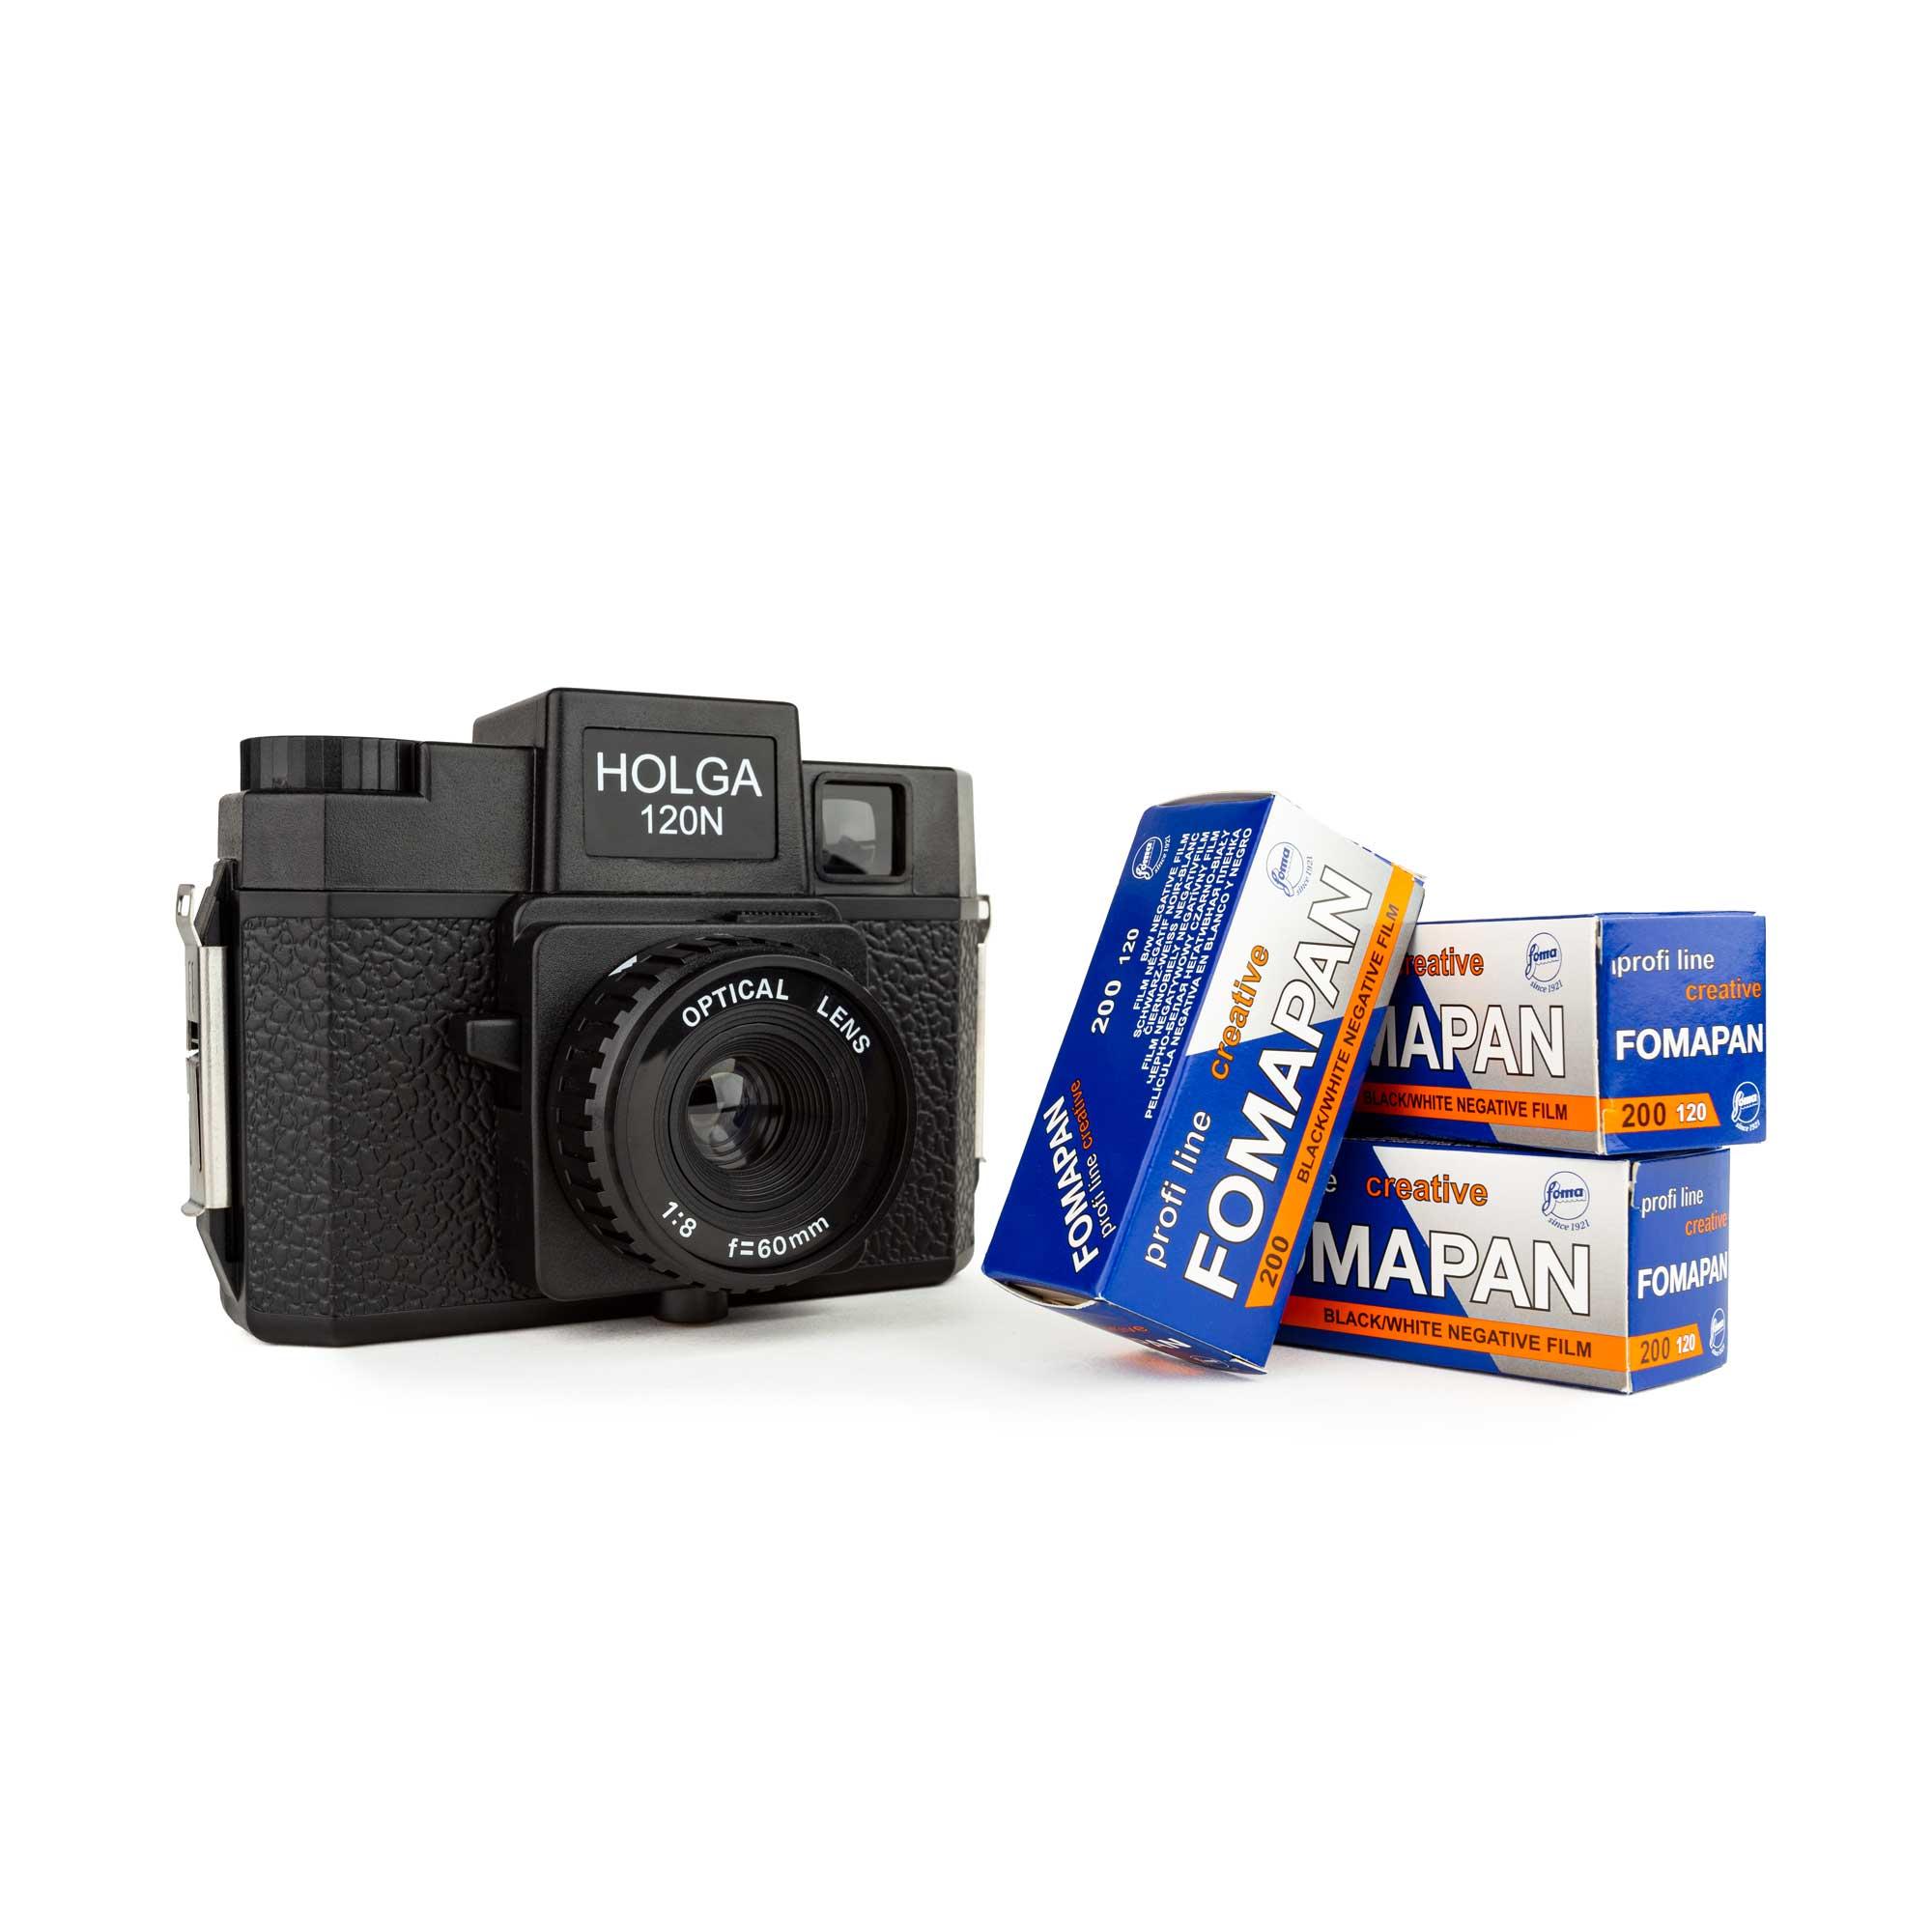 Set HOLGA 120 N Kamera für 120er Rollfilm schwarz + 3 fomapan 200